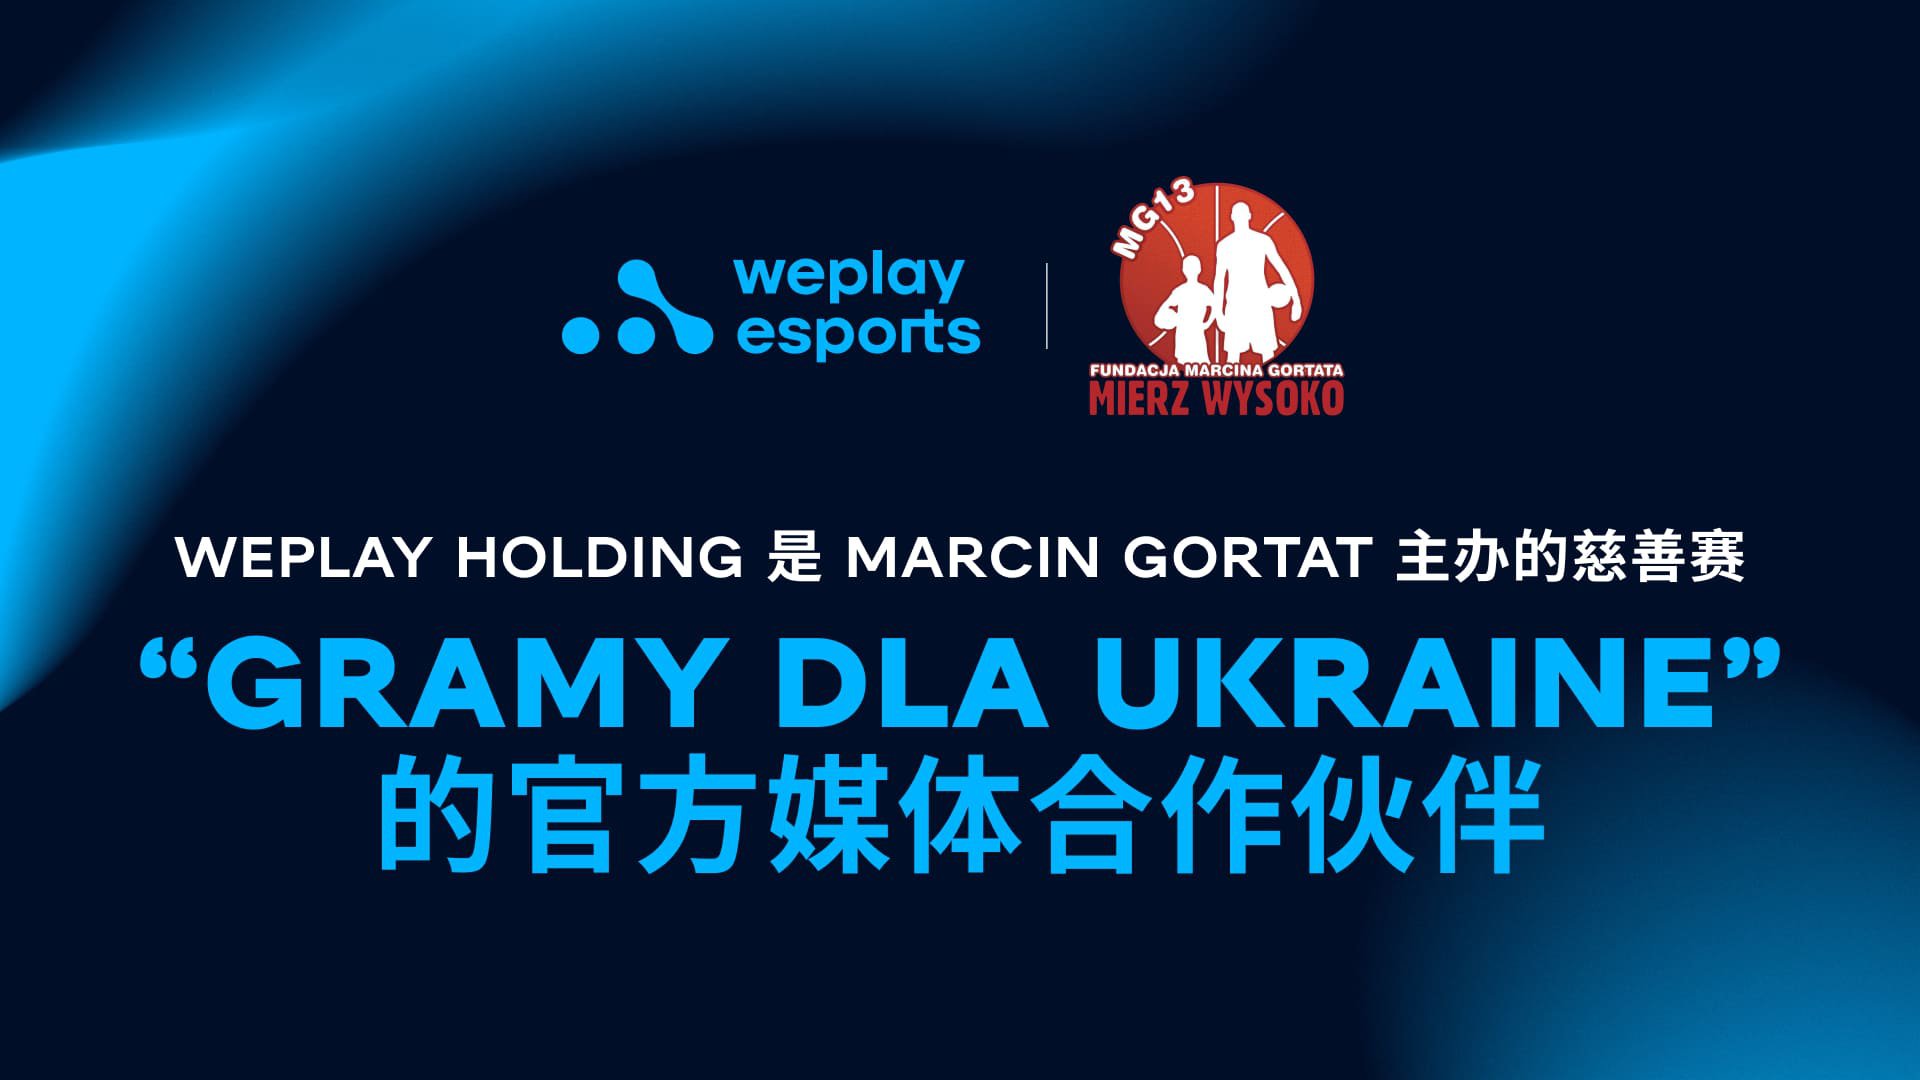 WePlay Holding 是 Marcin Gortat 主办的慈善赛 “Gramy dla Ukraine”的官方媒体合作伙伴。图像： WePlay Holding